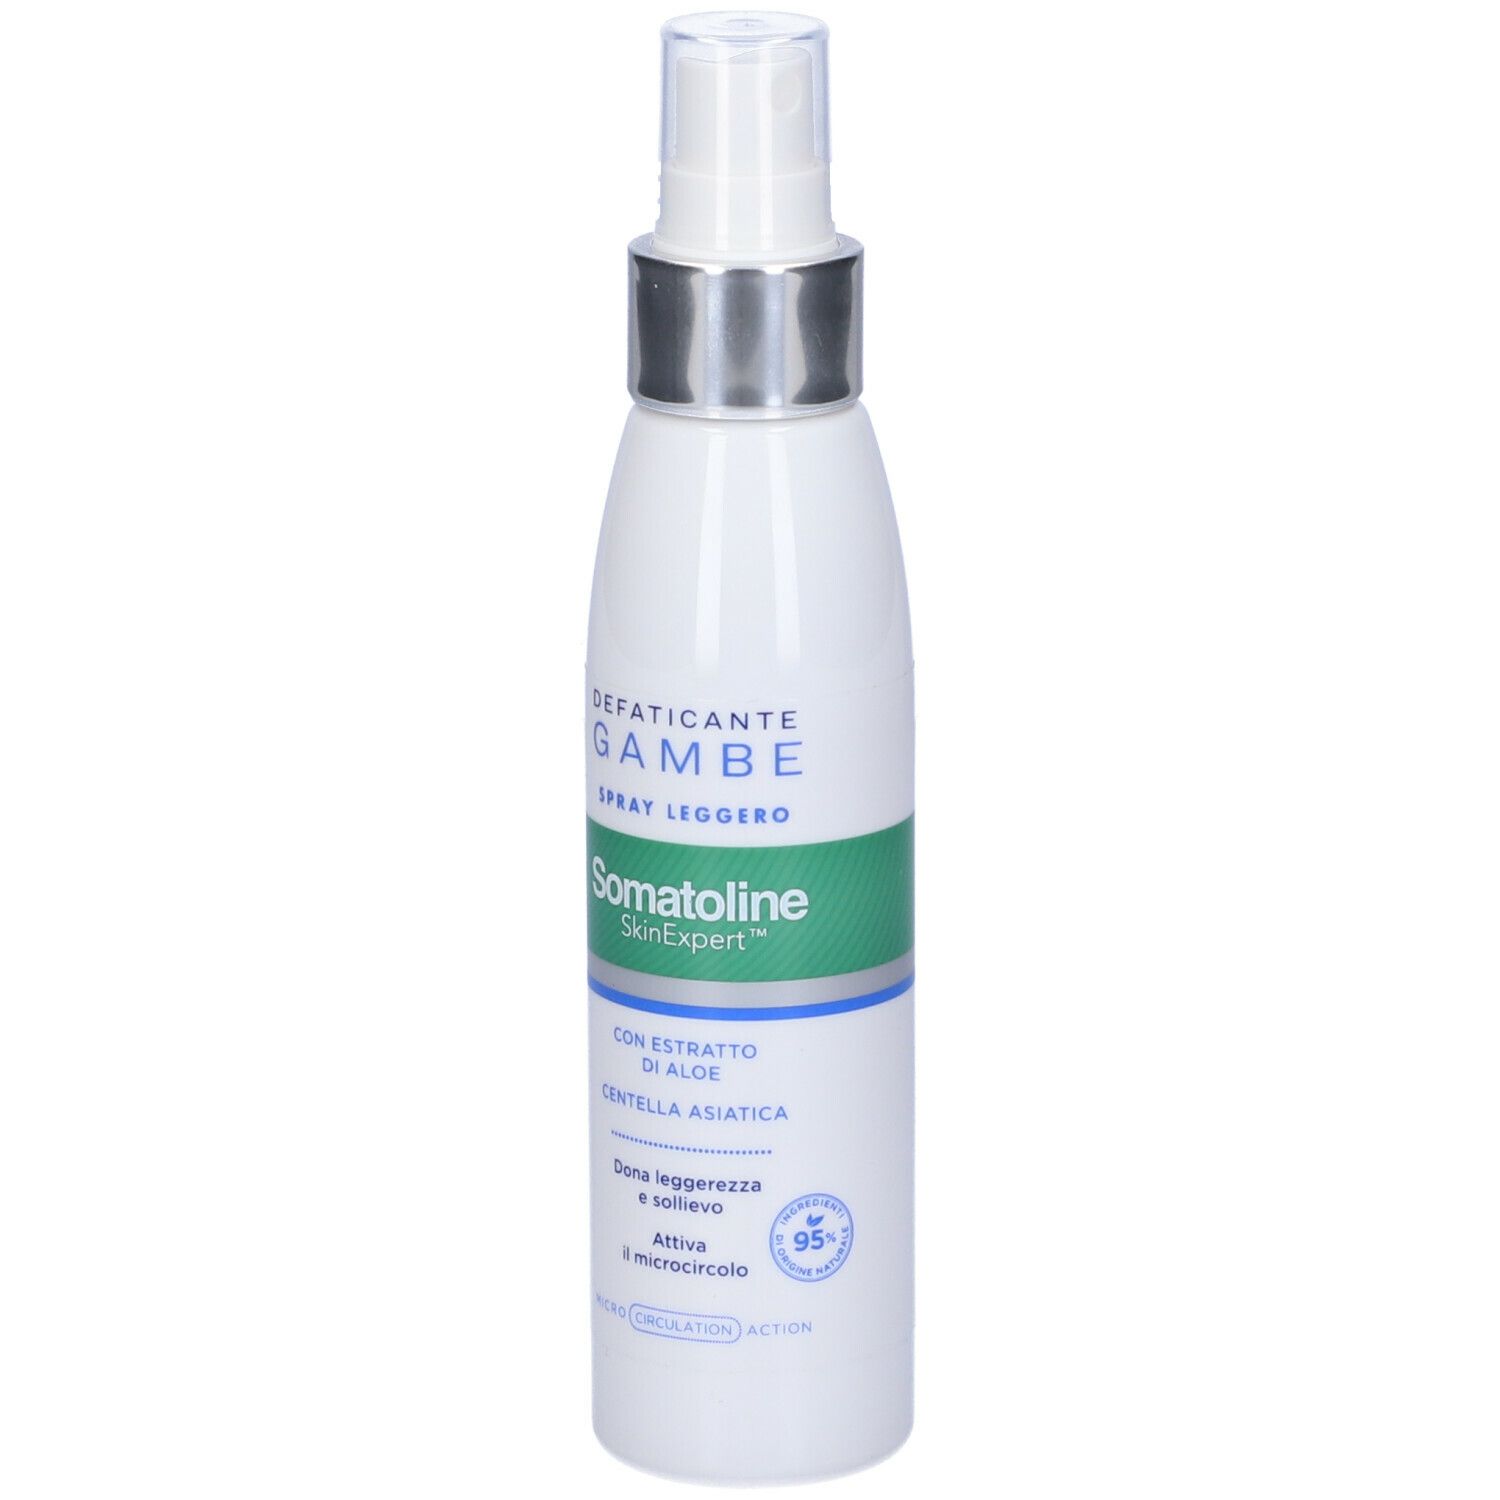 Somatoline Cosmetics® Defaticante Gambe Spray